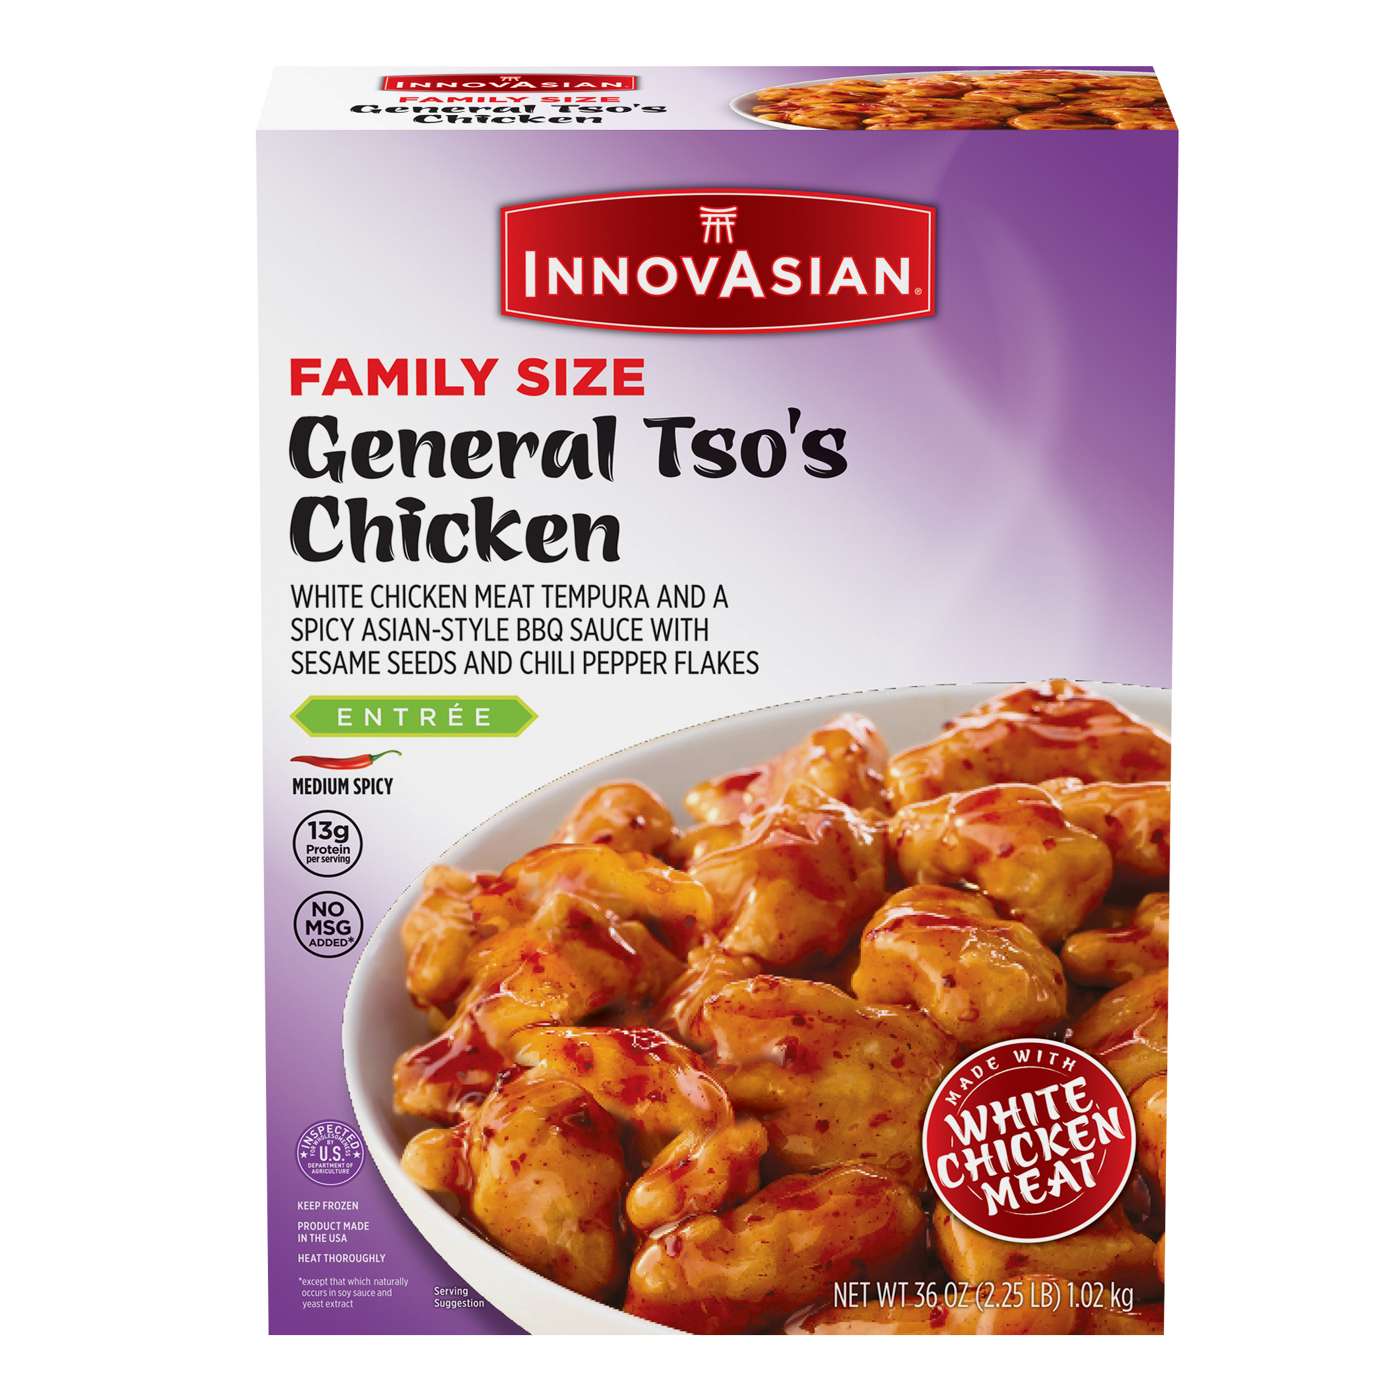 InnovAsian Frozen General Tso's Chicken - Family-Size; image 1 of 7